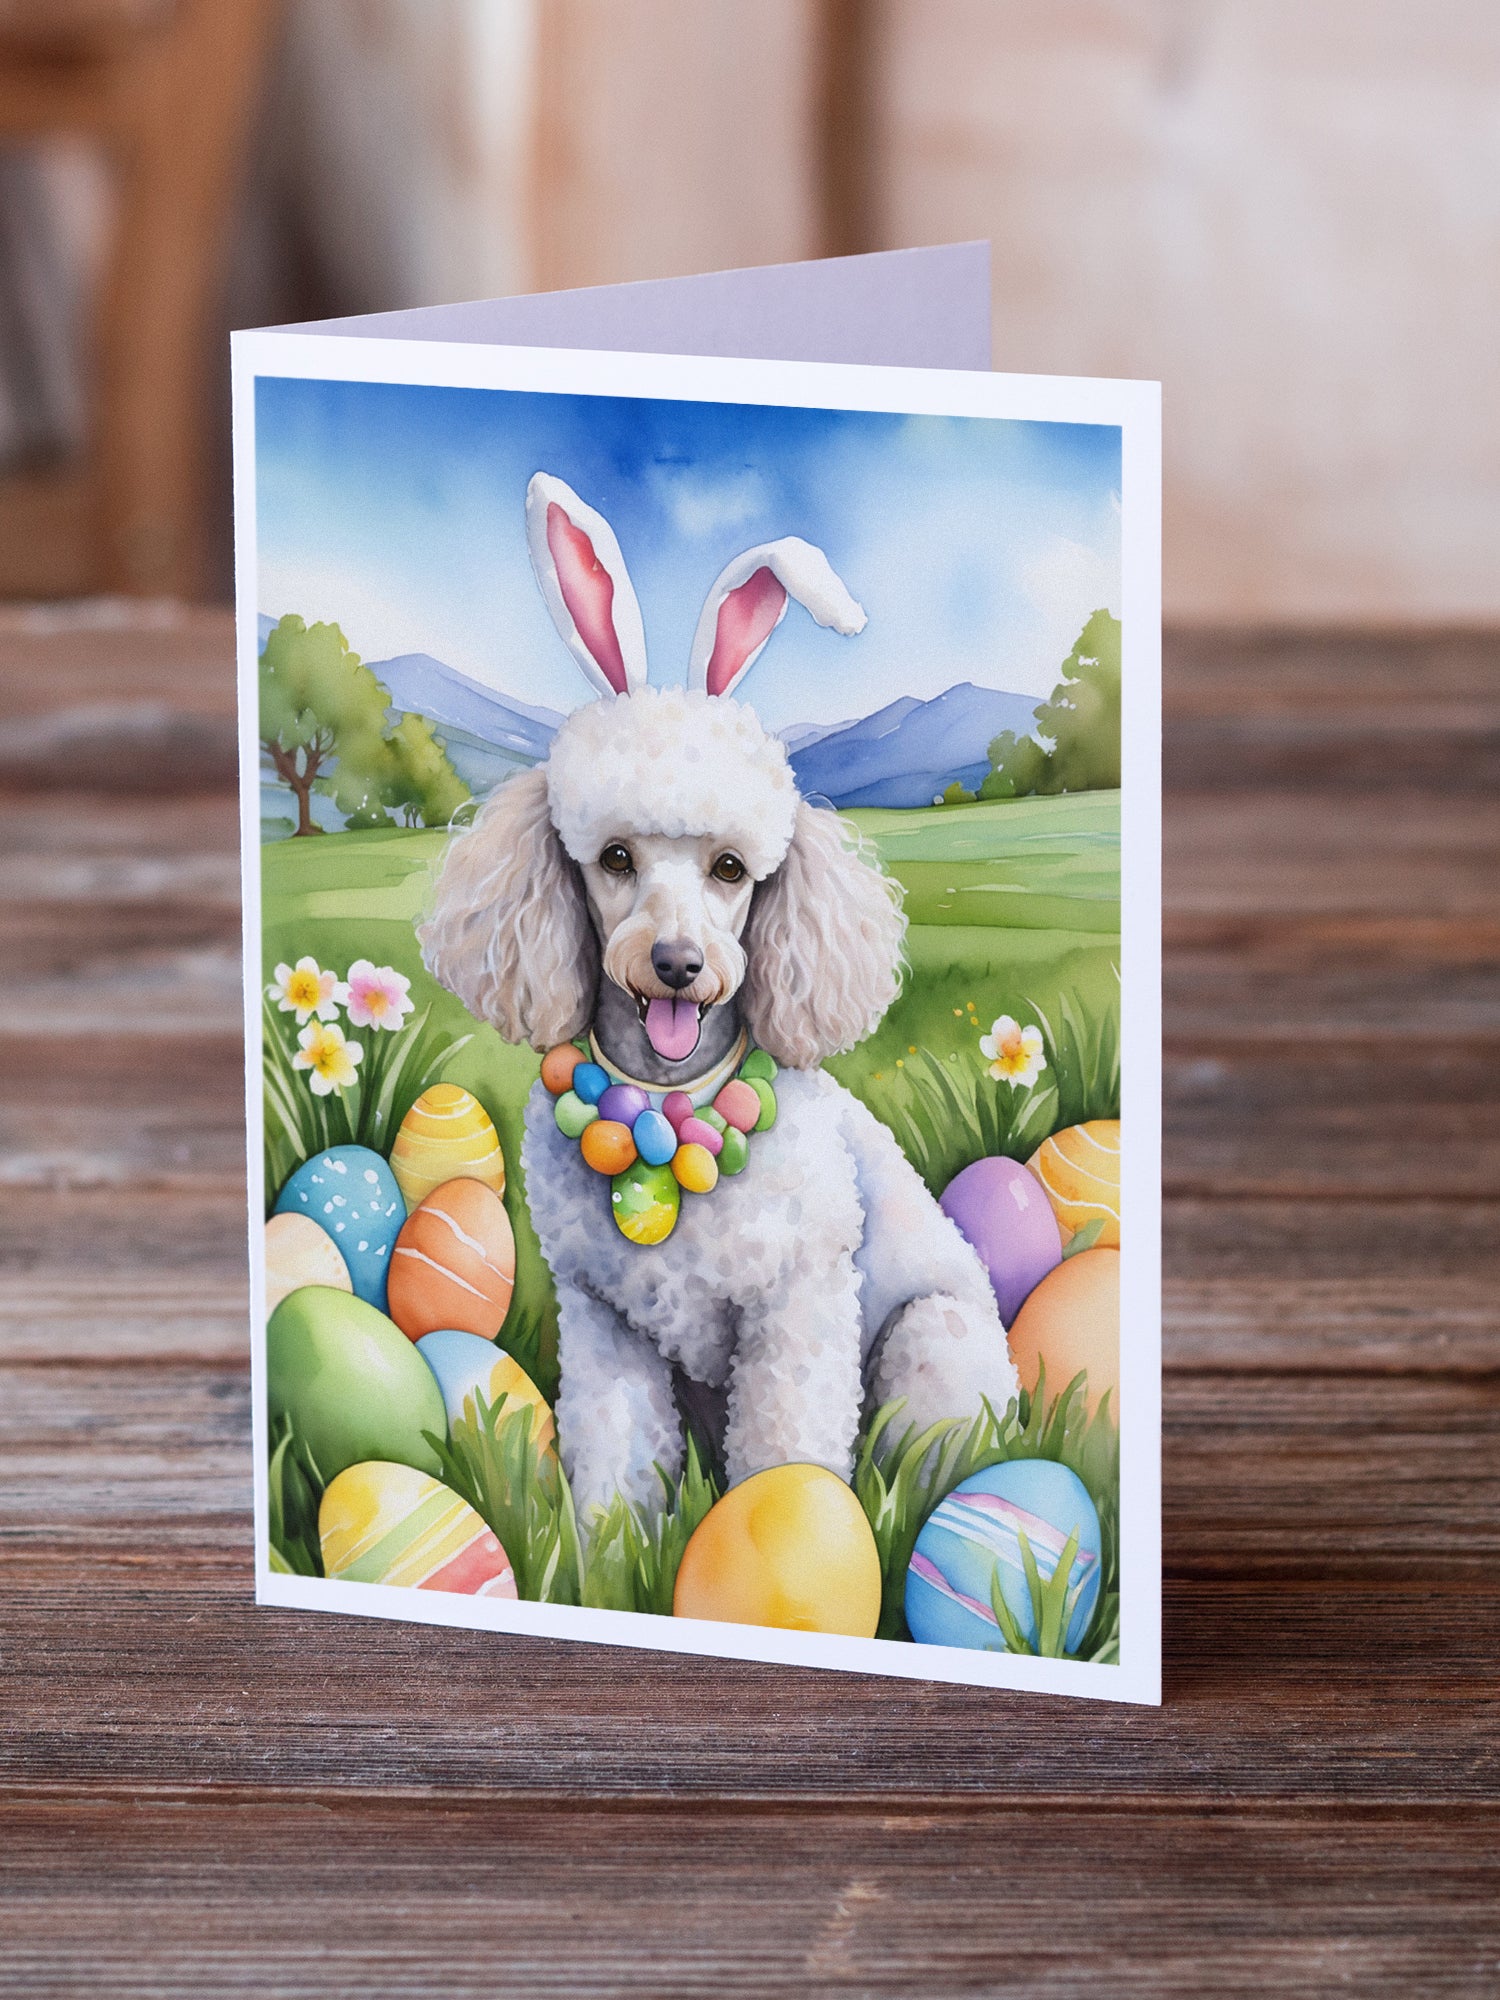 White Poodle Easter Egg Hunt Greeting Cards Pack of 8